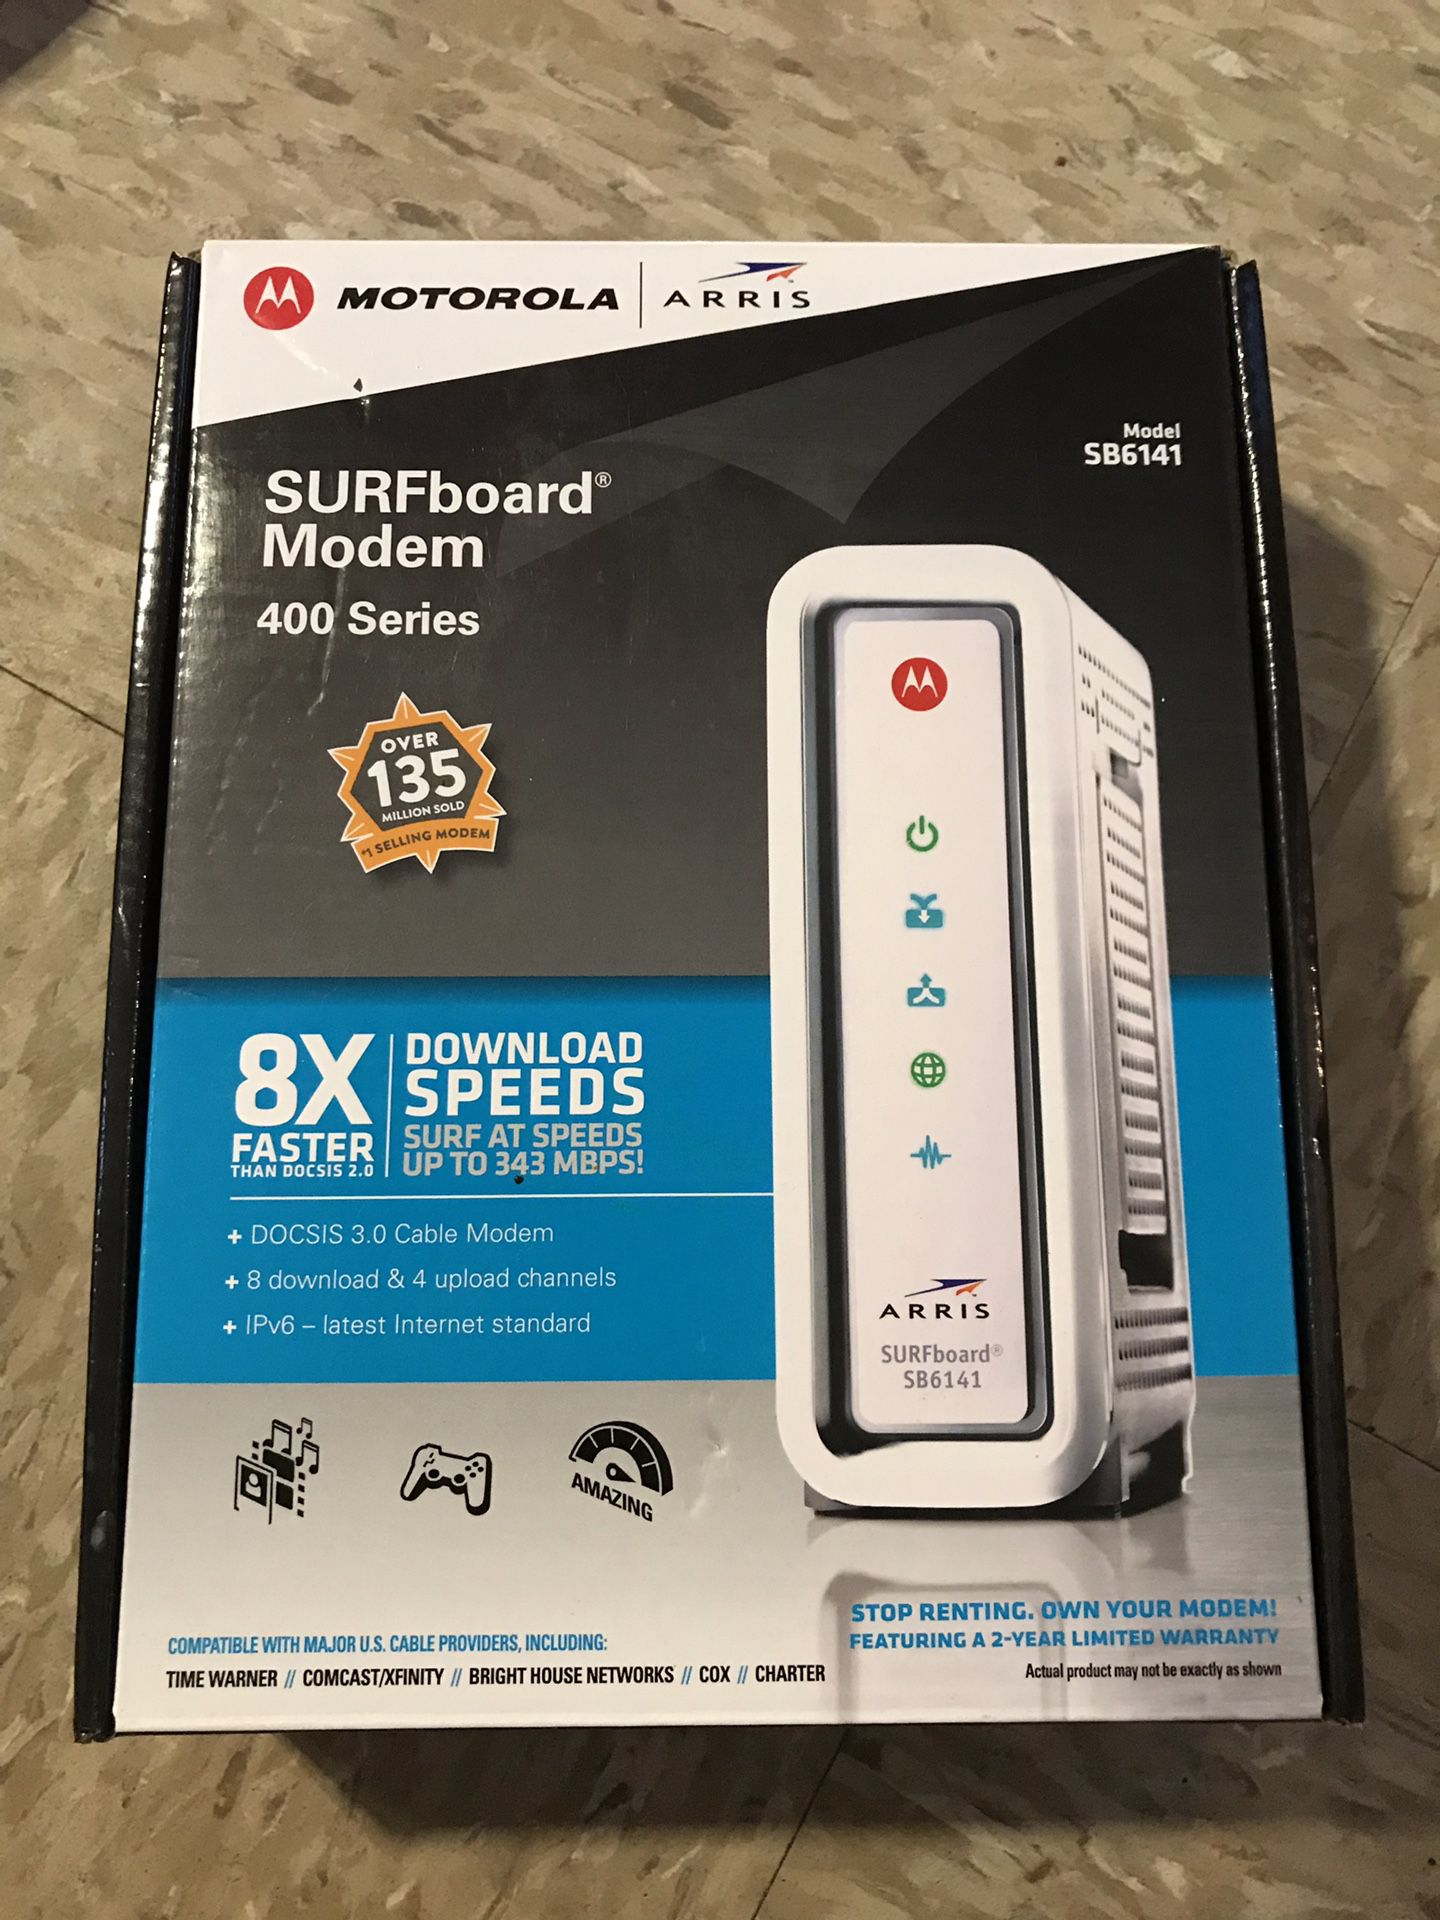 Motorola Arris surfboard modem 400 series